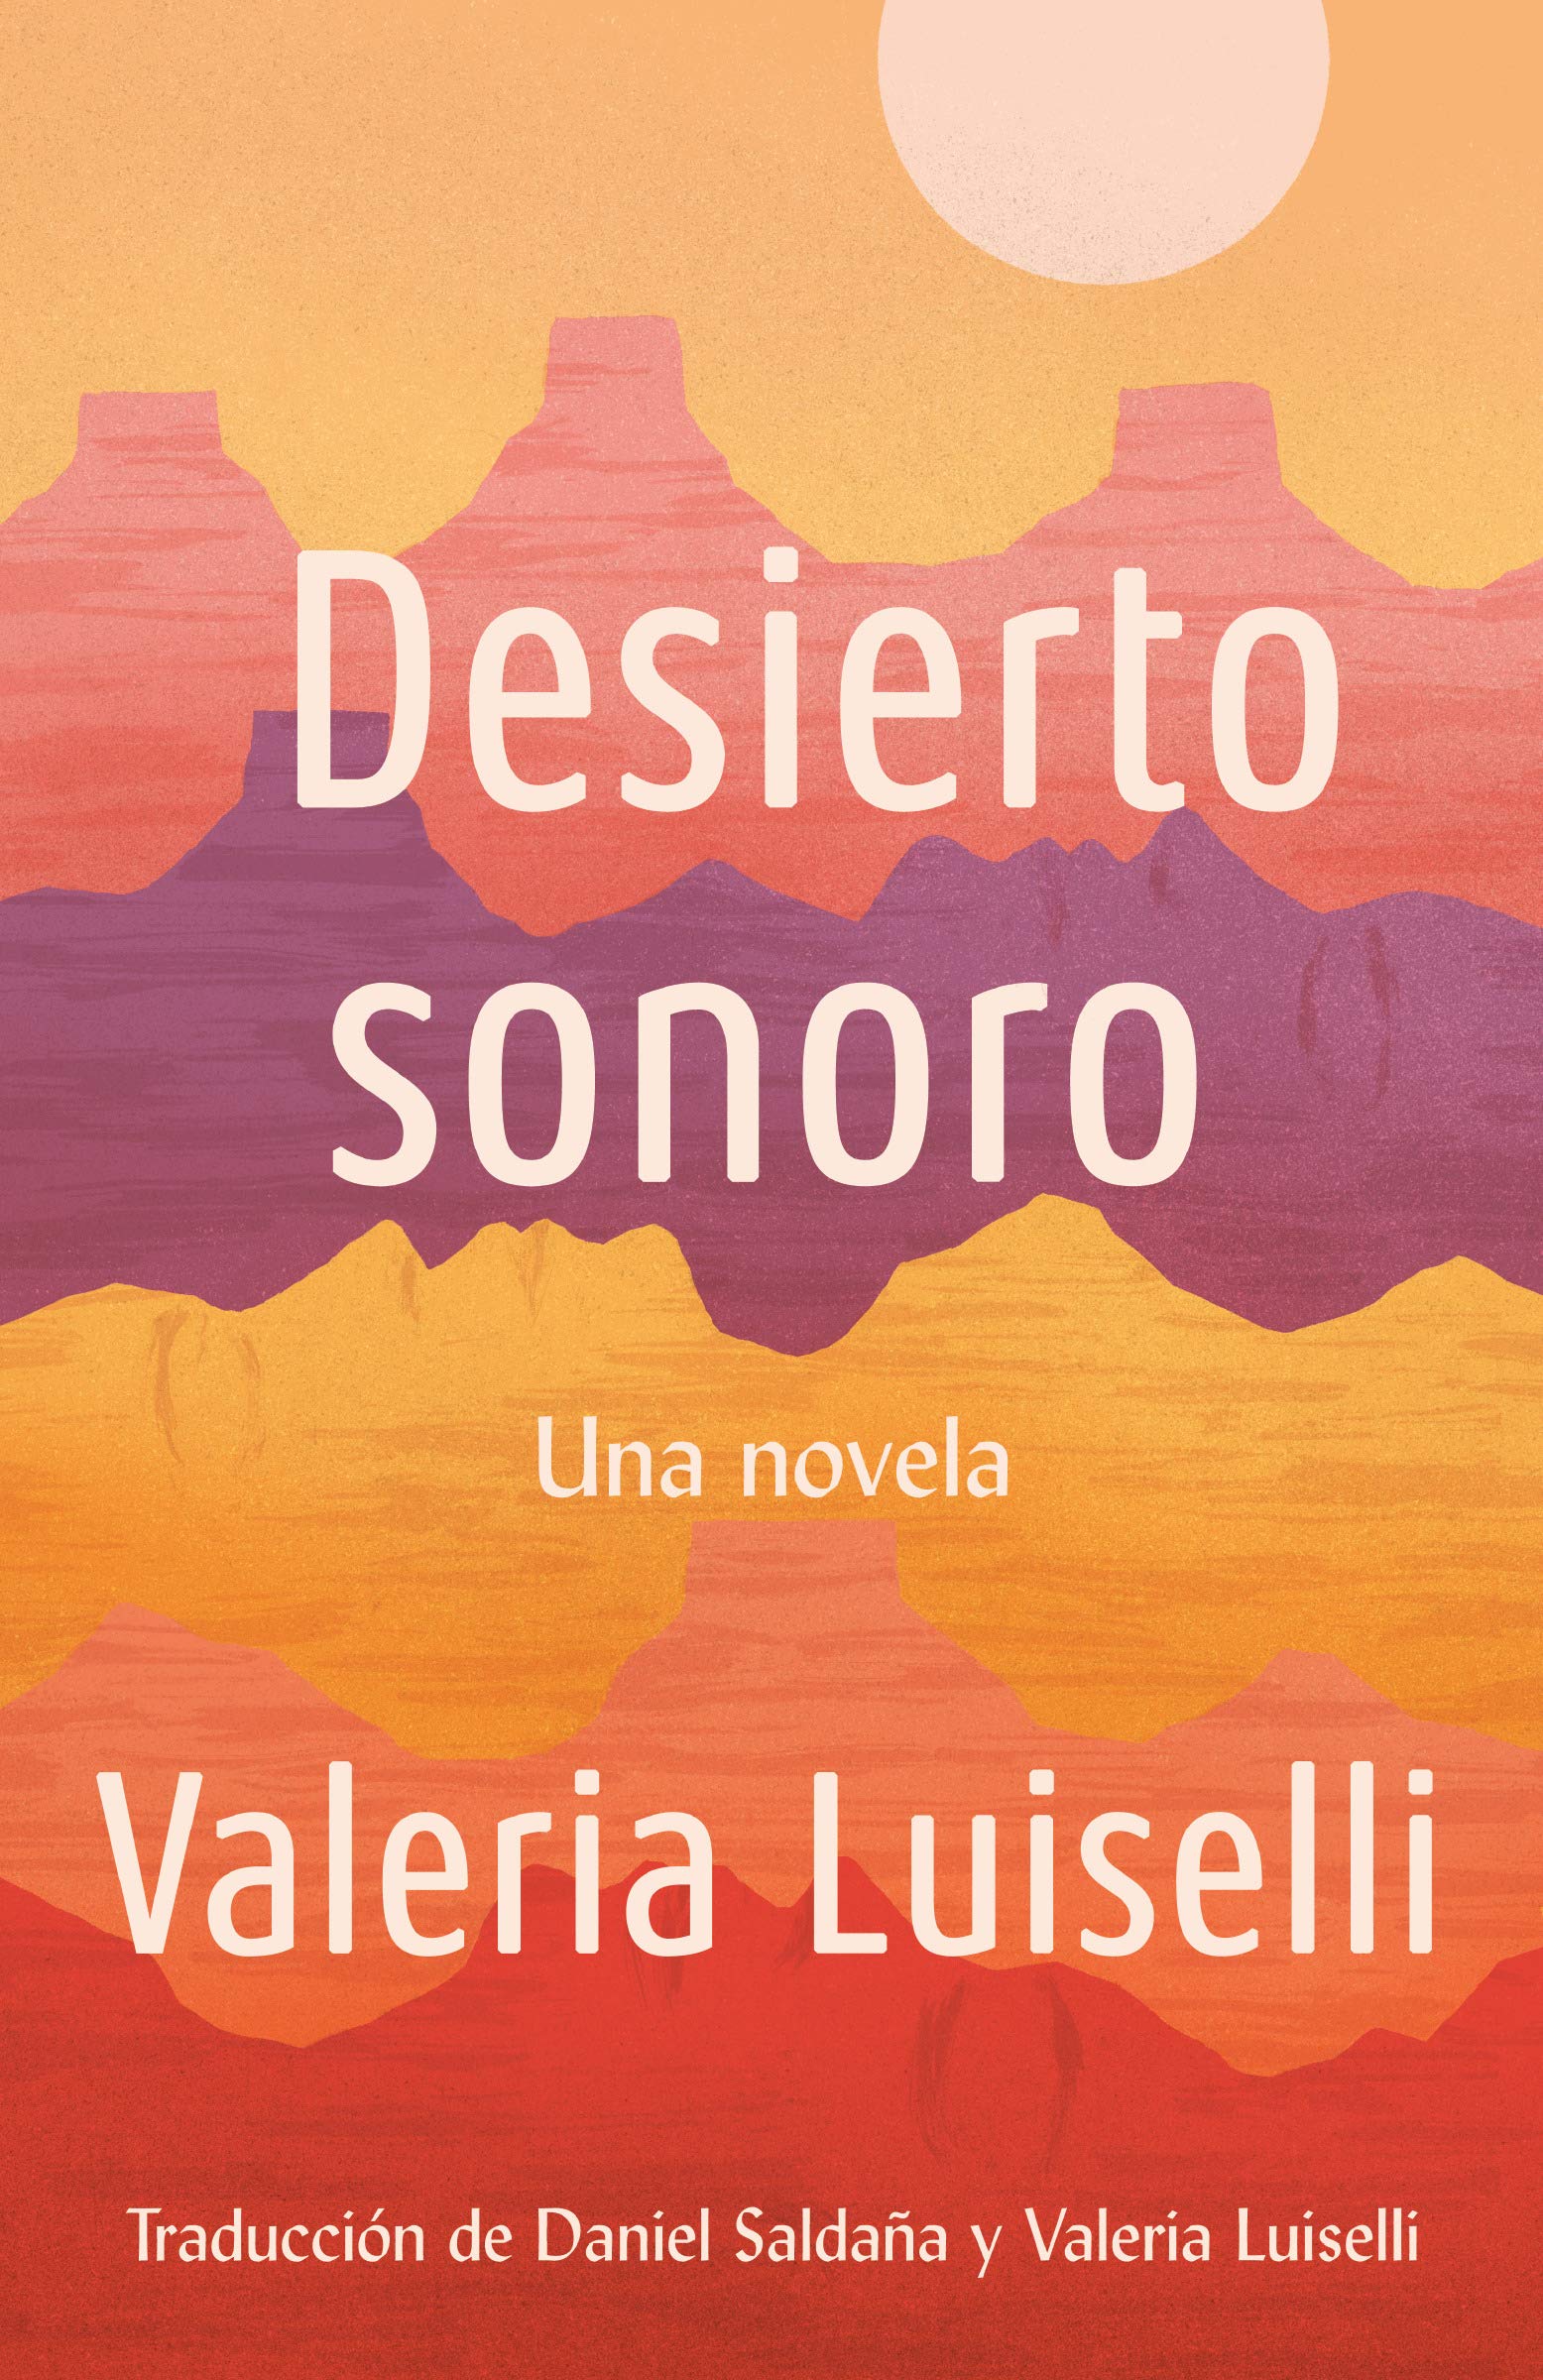 Desierto sonoro, by Valeria Luiselli